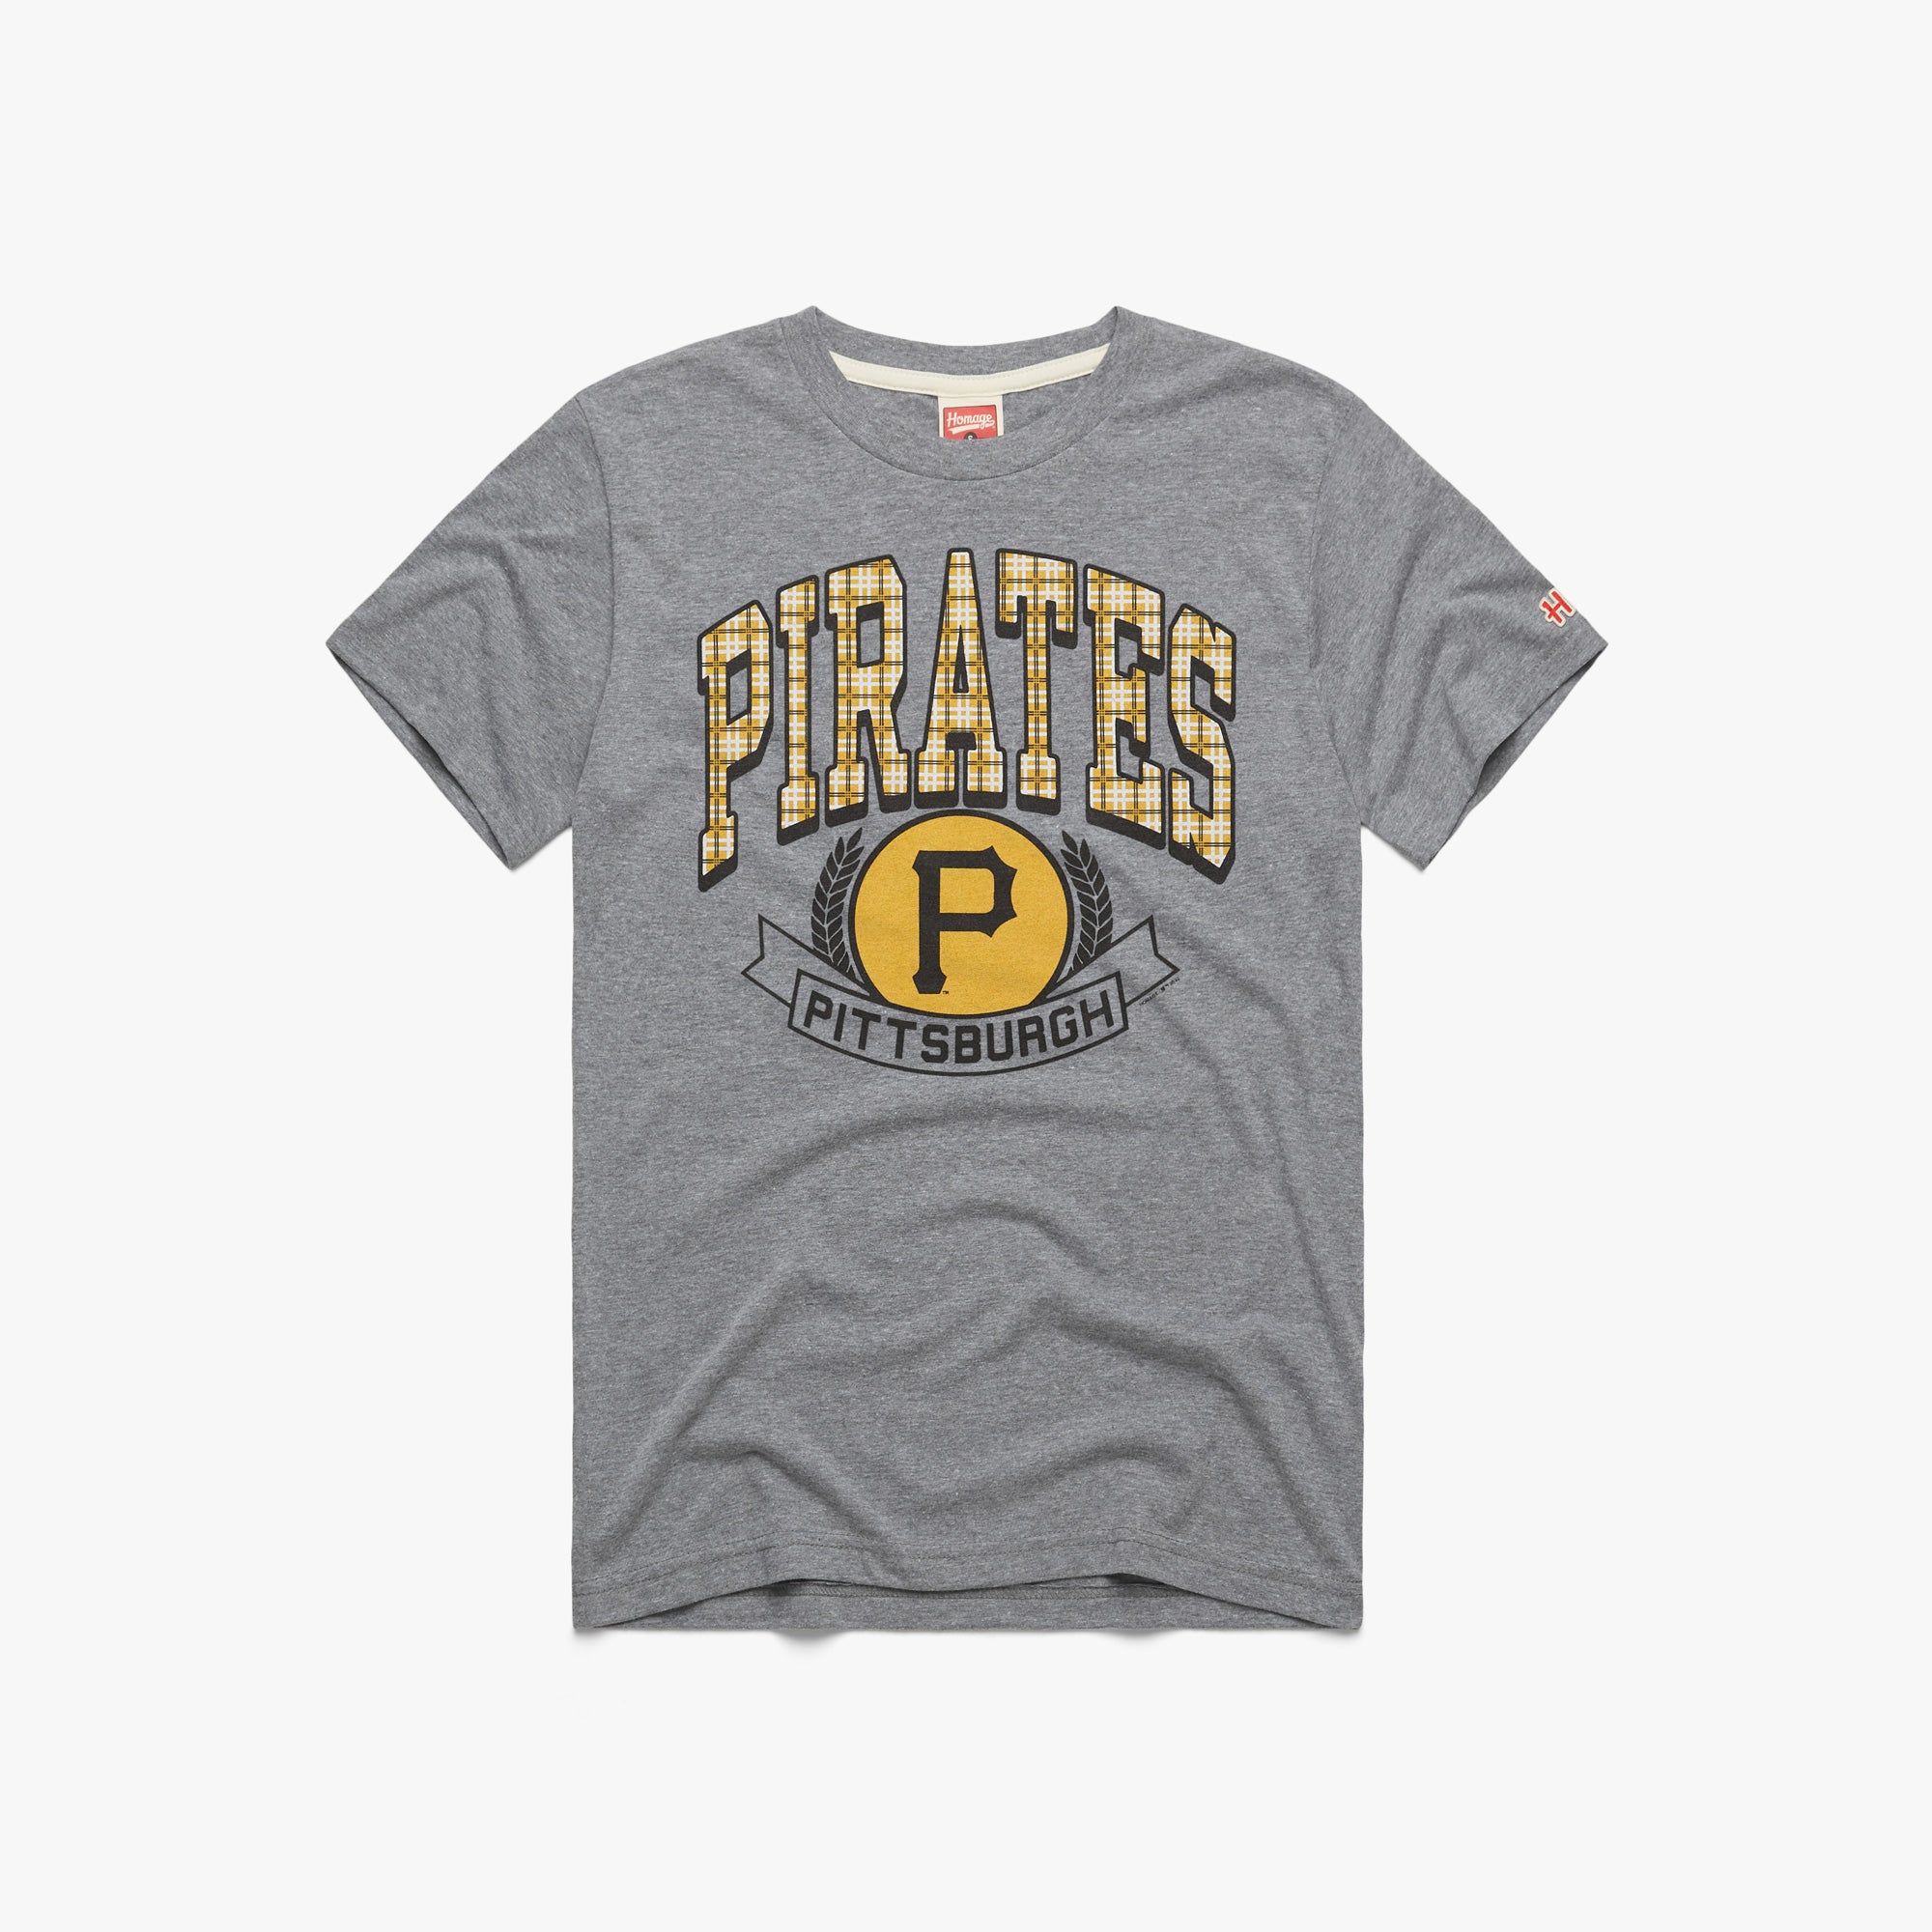 MLB Baseball Pittsburgh Pirates Cool Snoopy Shirt For Sale - The